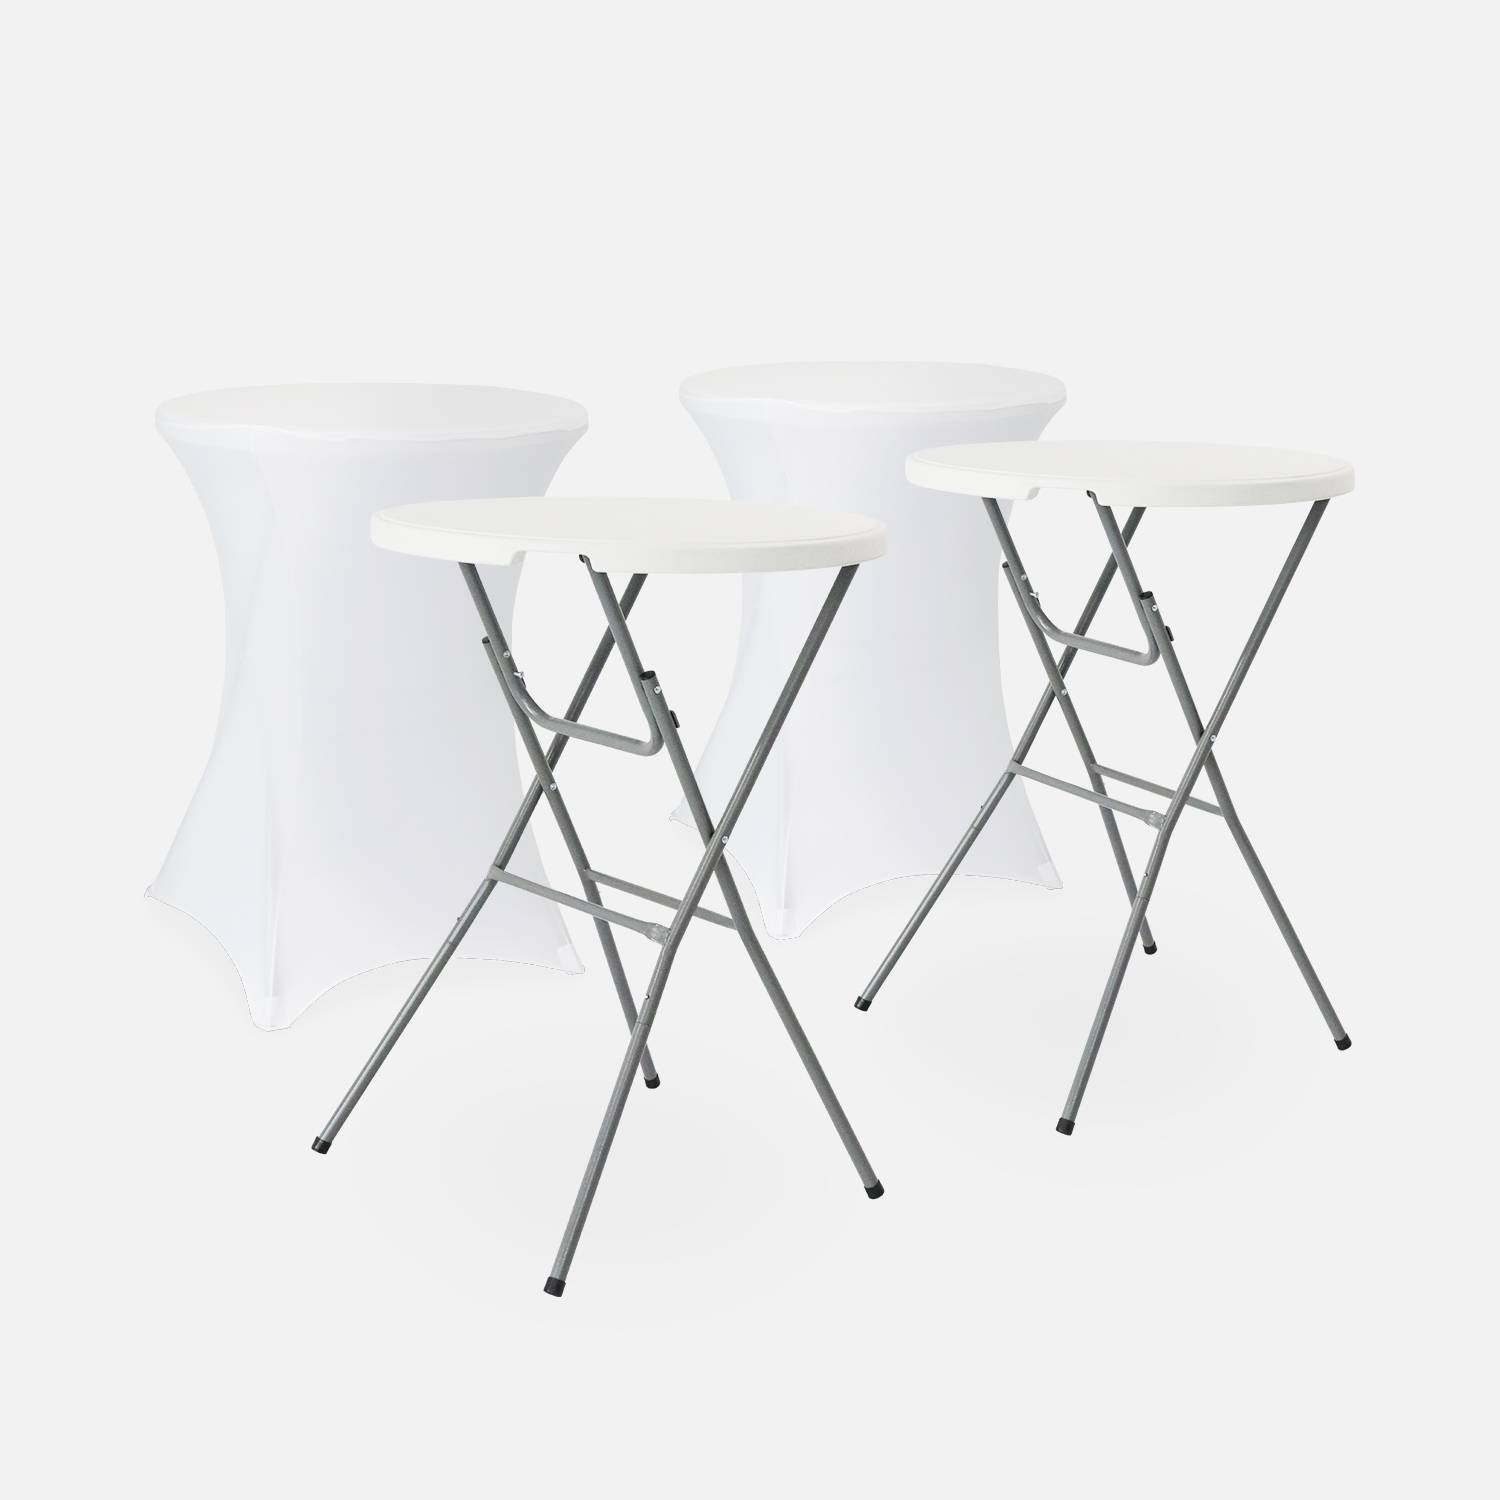 Conjunto de 2 mesas altas - GALA - Mange debout, dobrável, Ø80cm x 110cm + 2 capas de poliéster branco Photo3